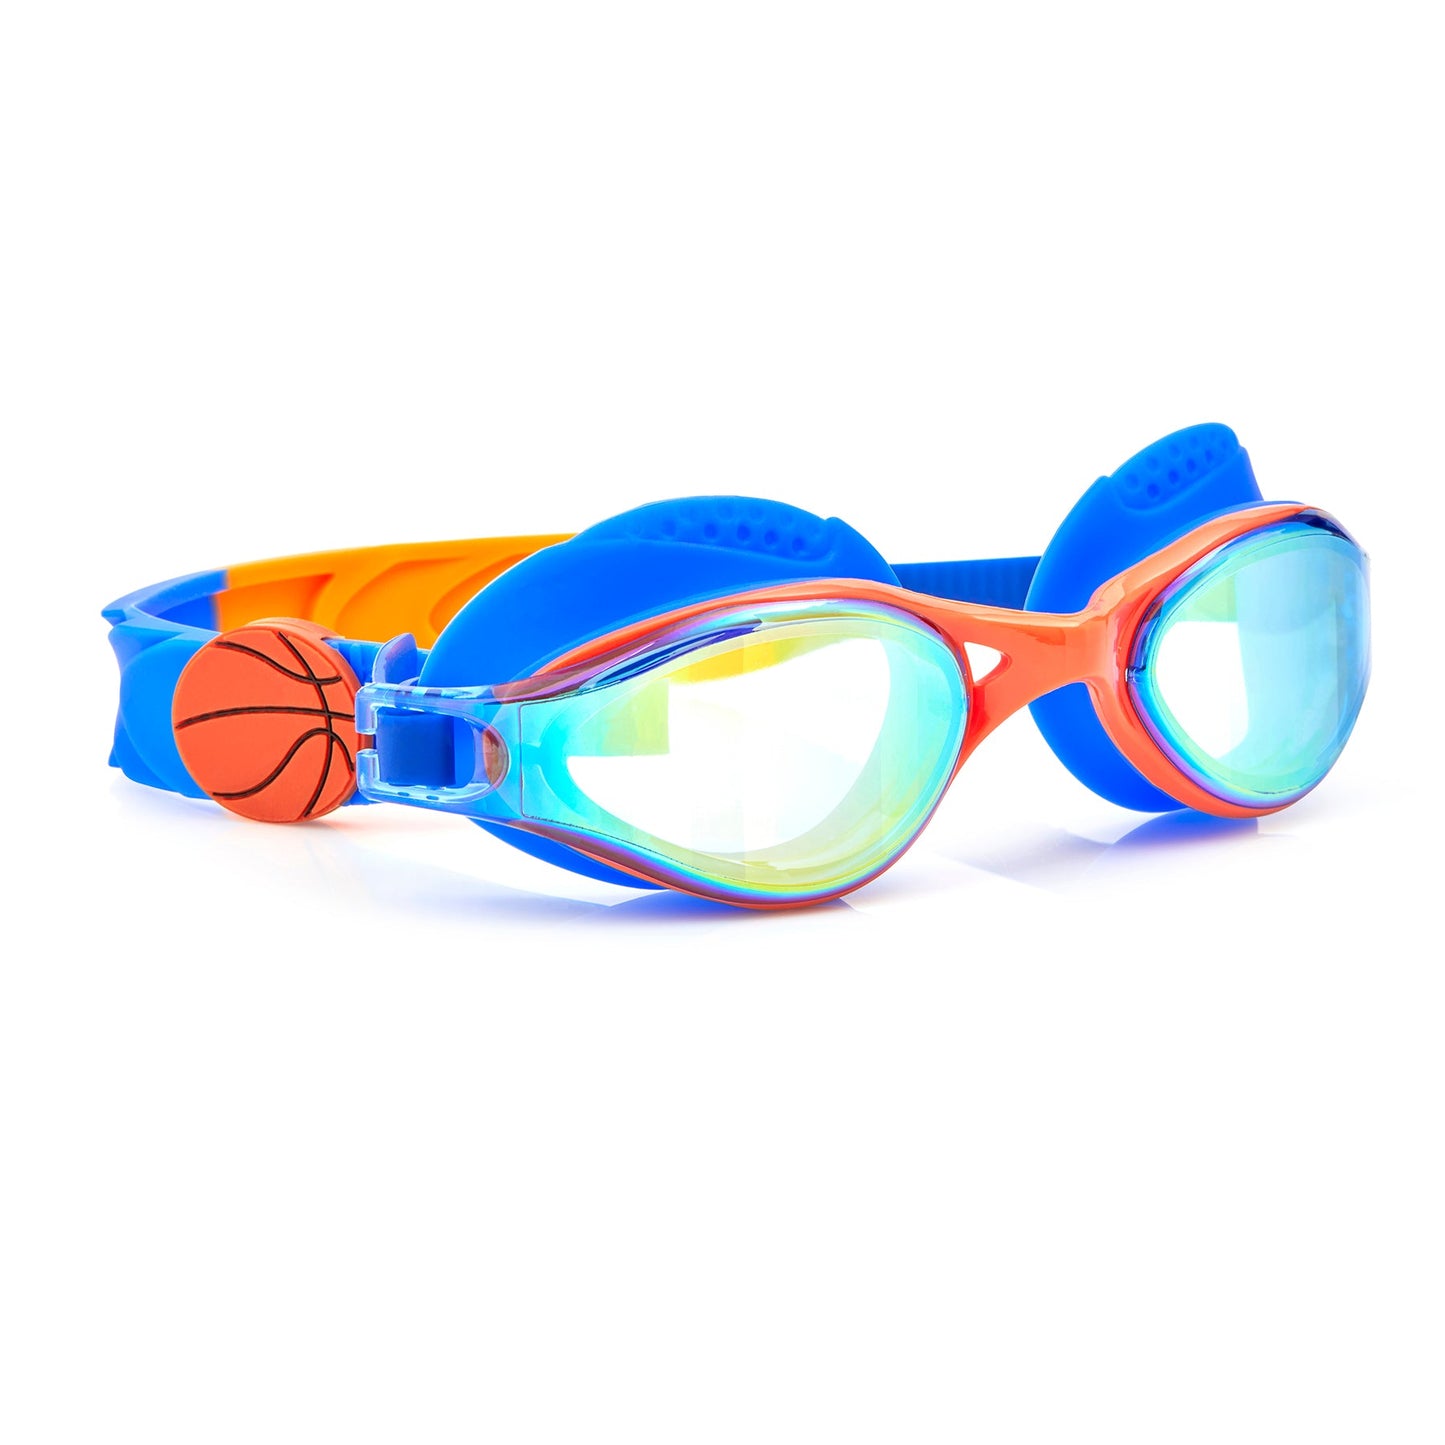 Bling 2o - Slam Dunk Basketball Goggles